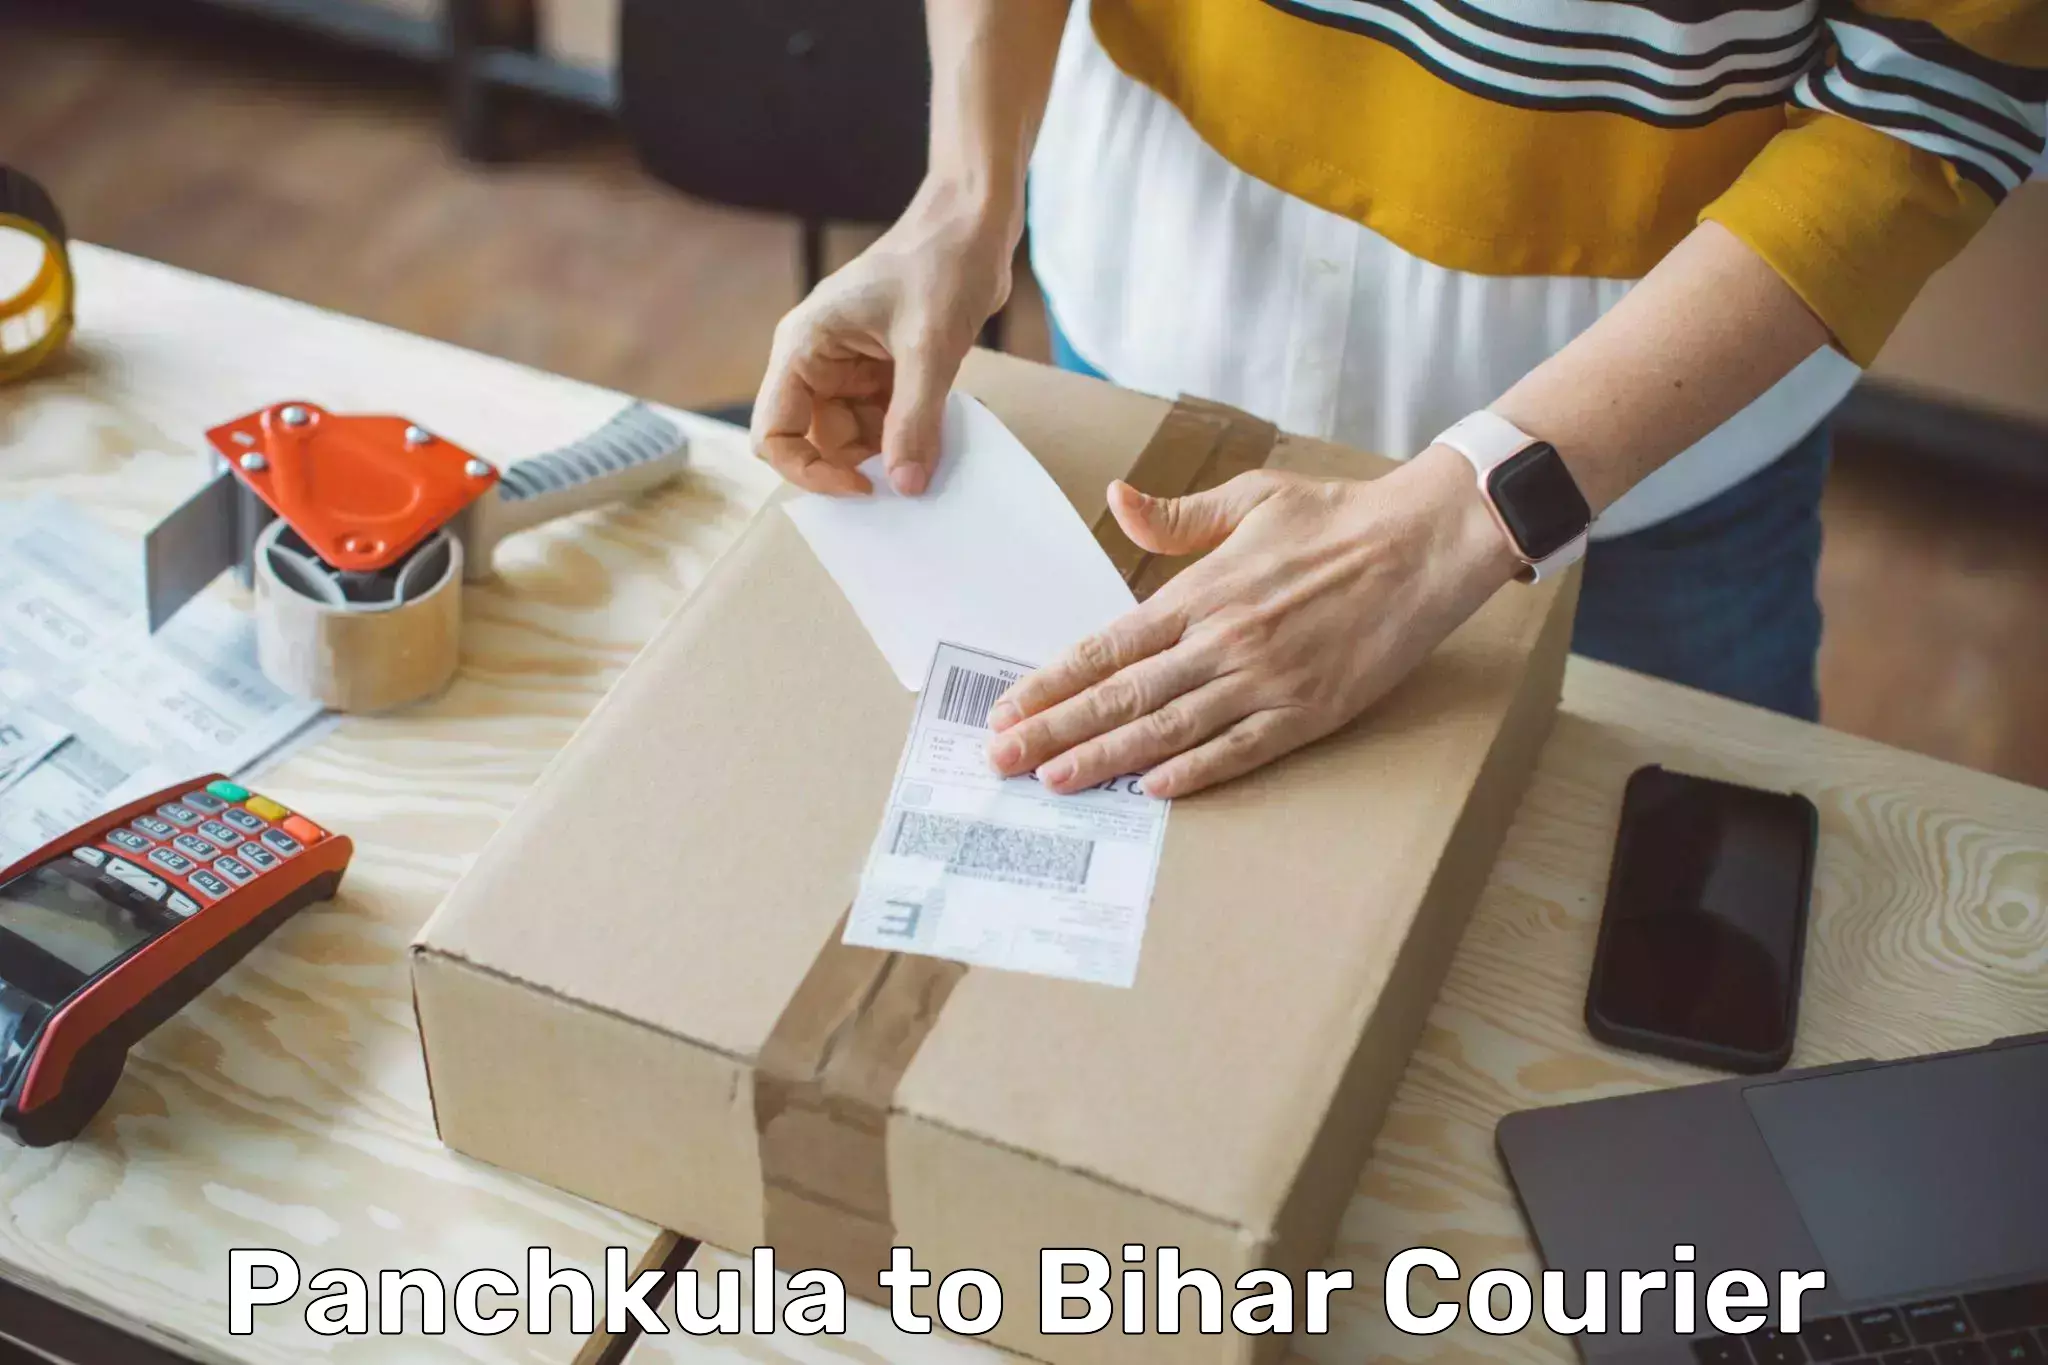 Customer-focused courier Panchkula to Bhorey